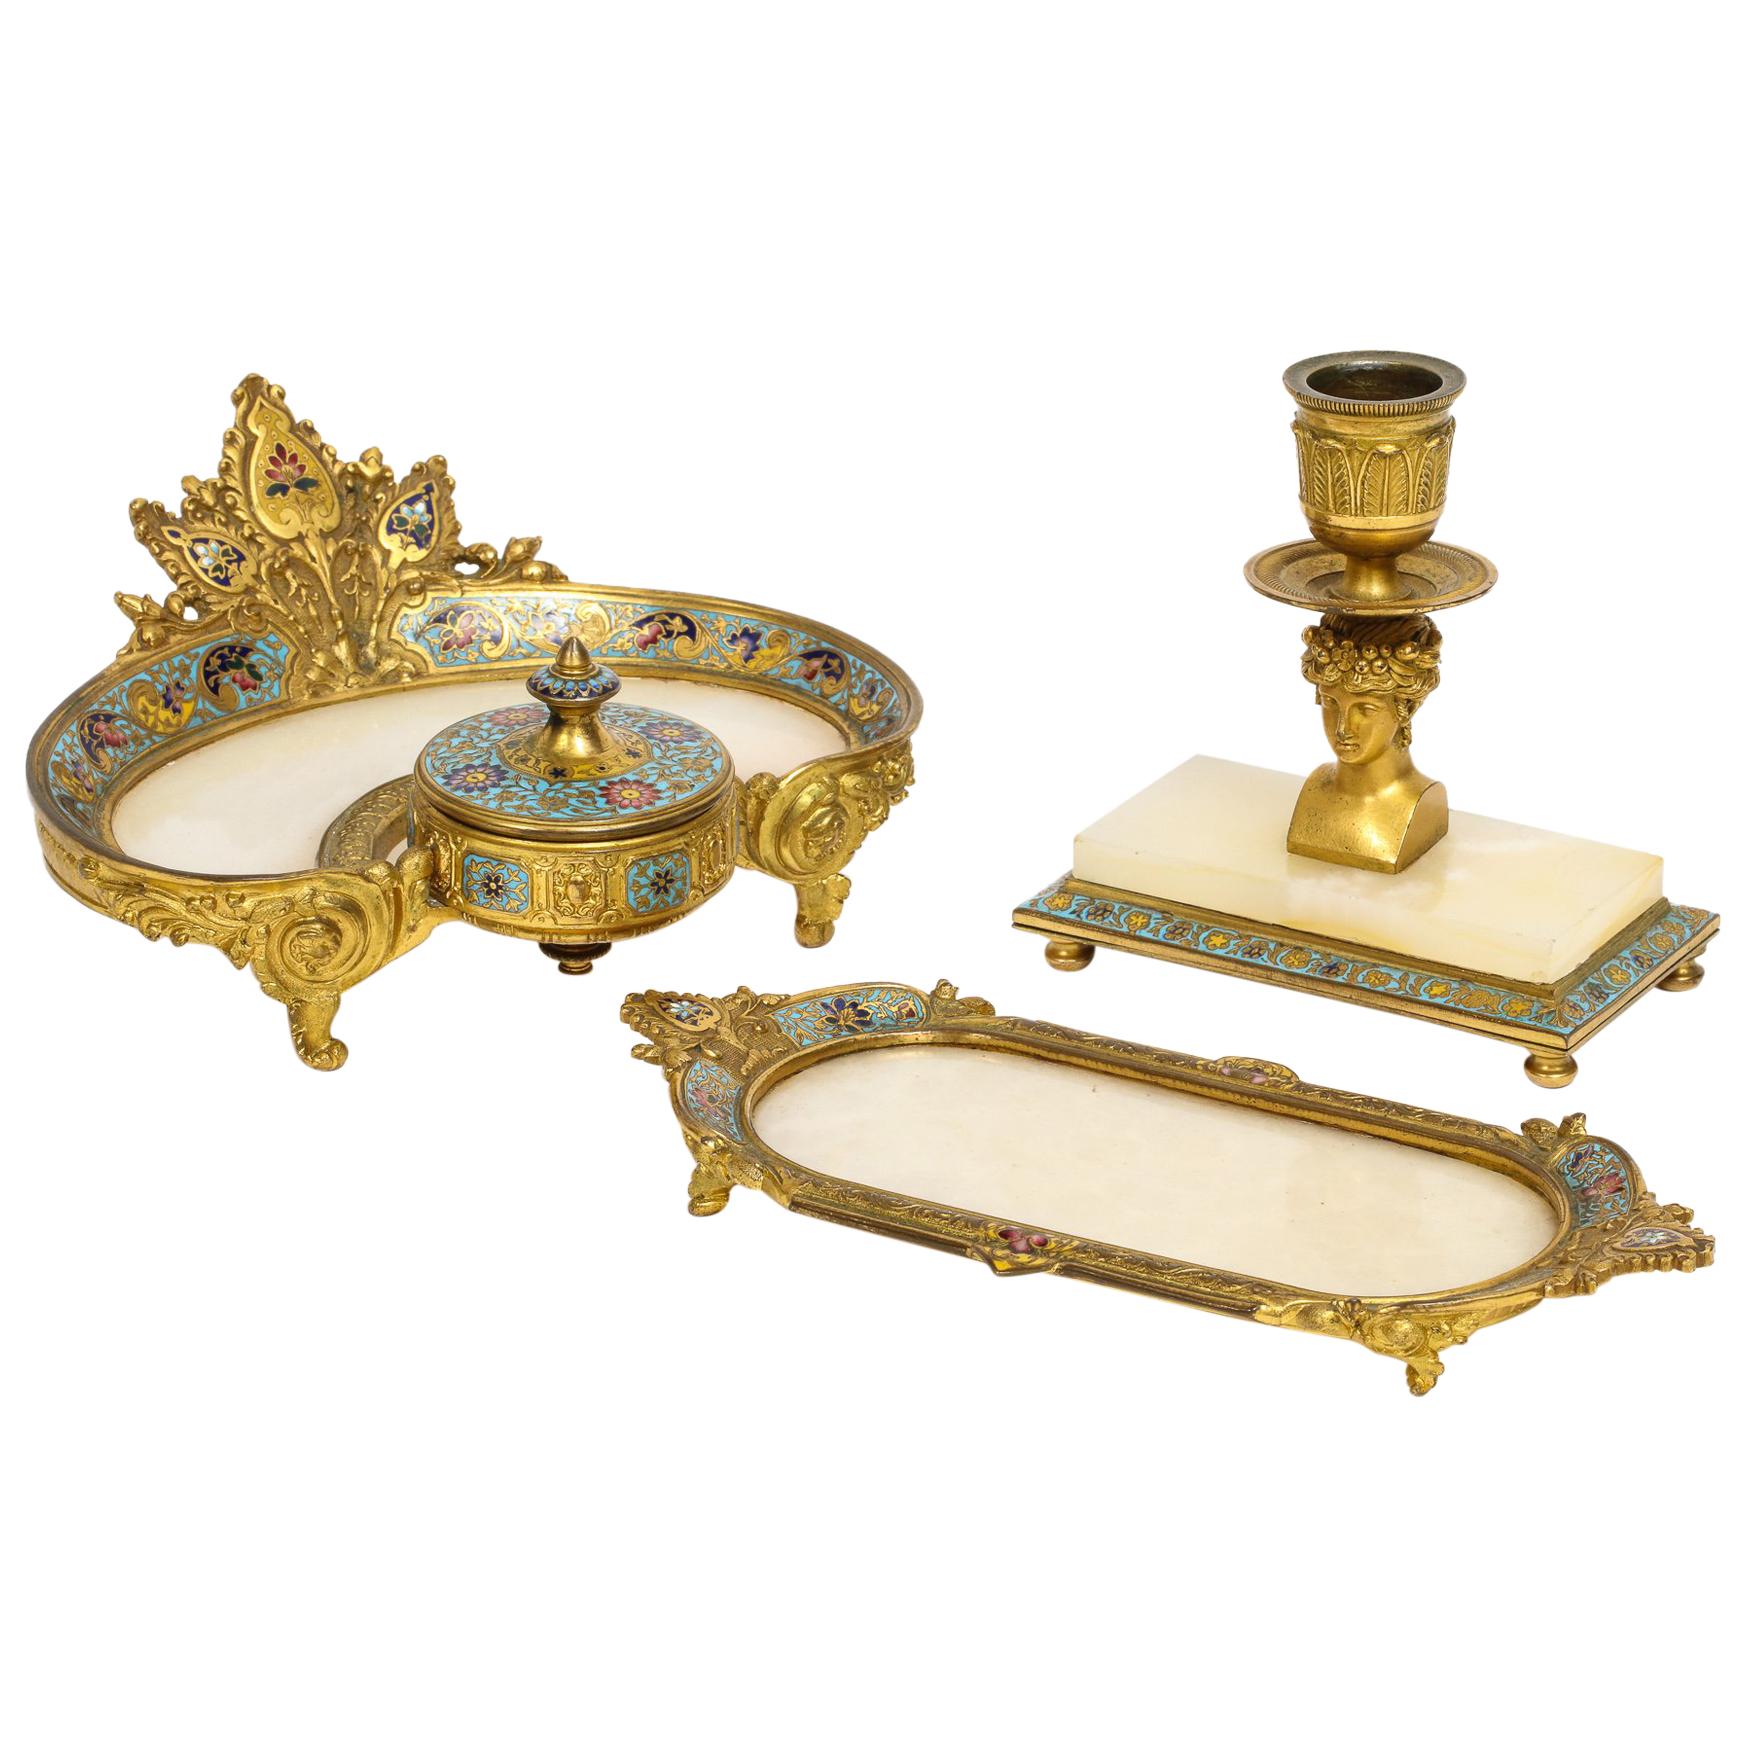 French Ormolu Bronze, Onyx, and Champlevé Cloisonné Enamel Desk Set, Inkwell